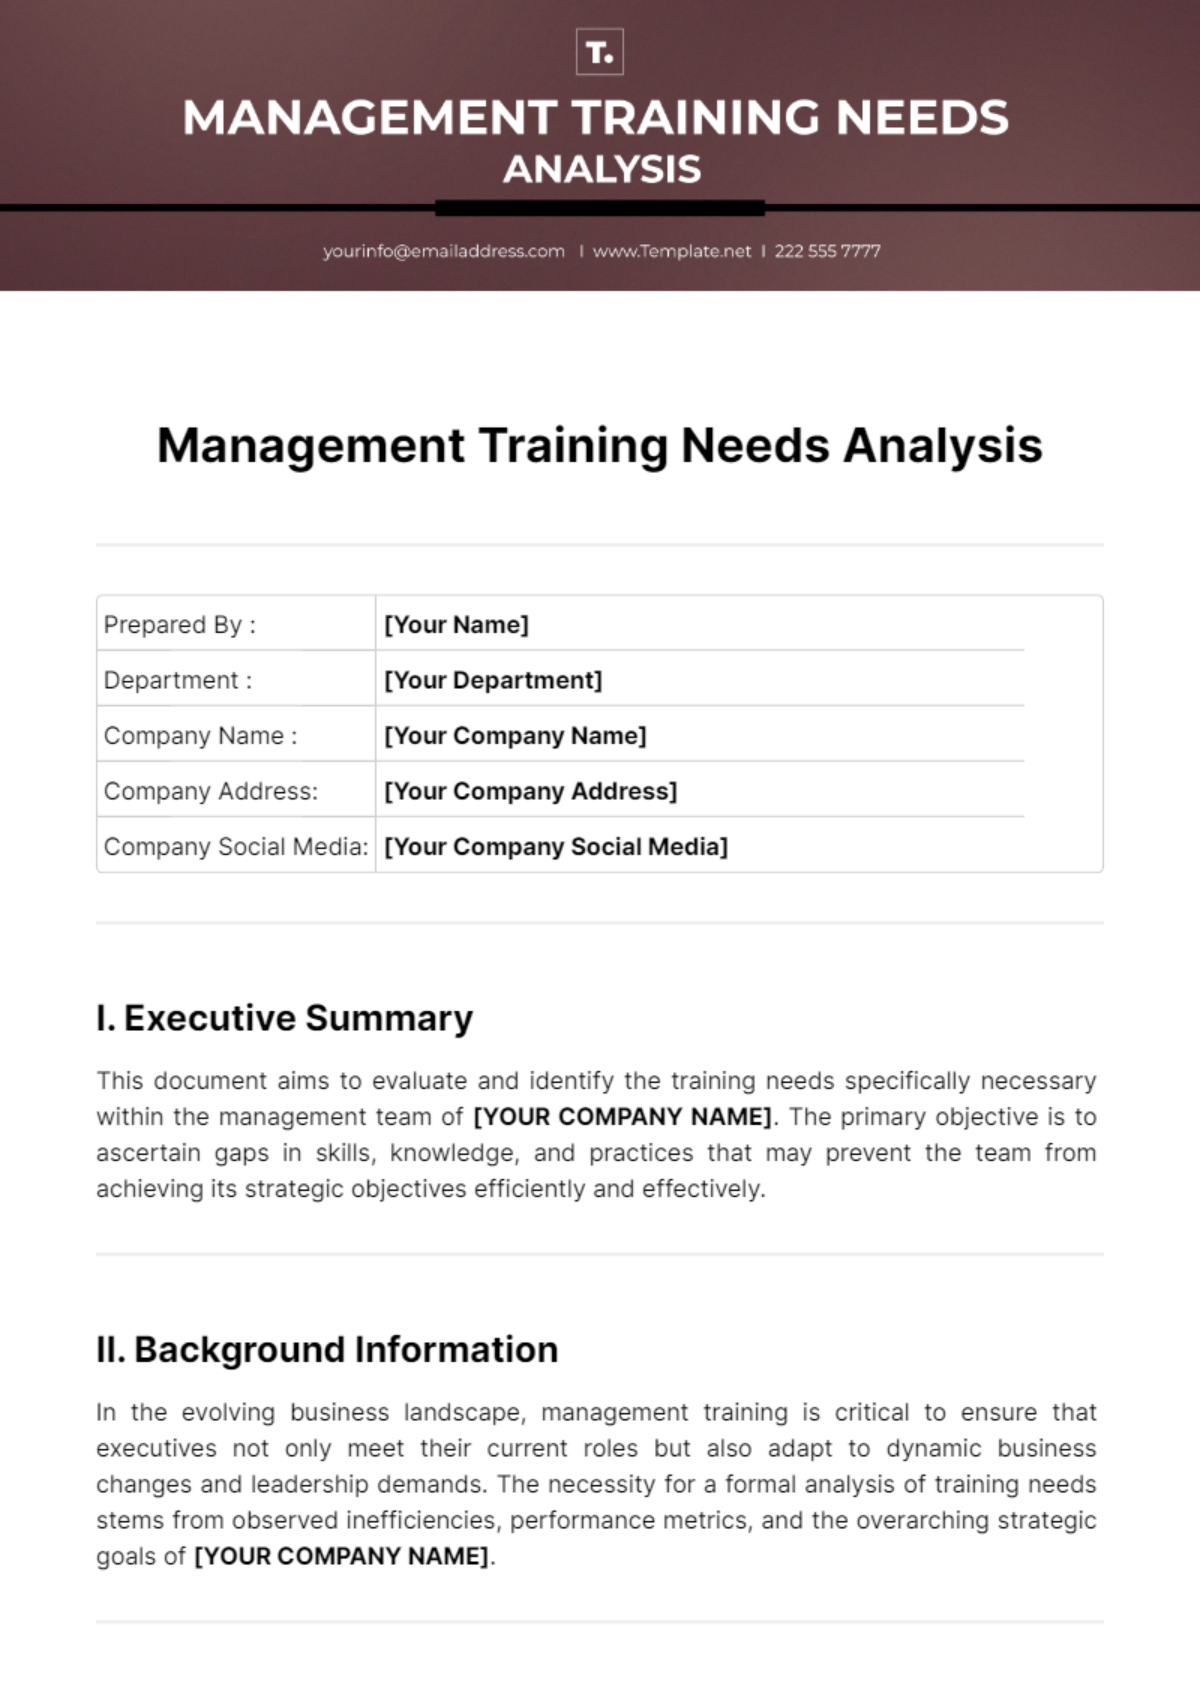 Management Training Needs Analysis Template